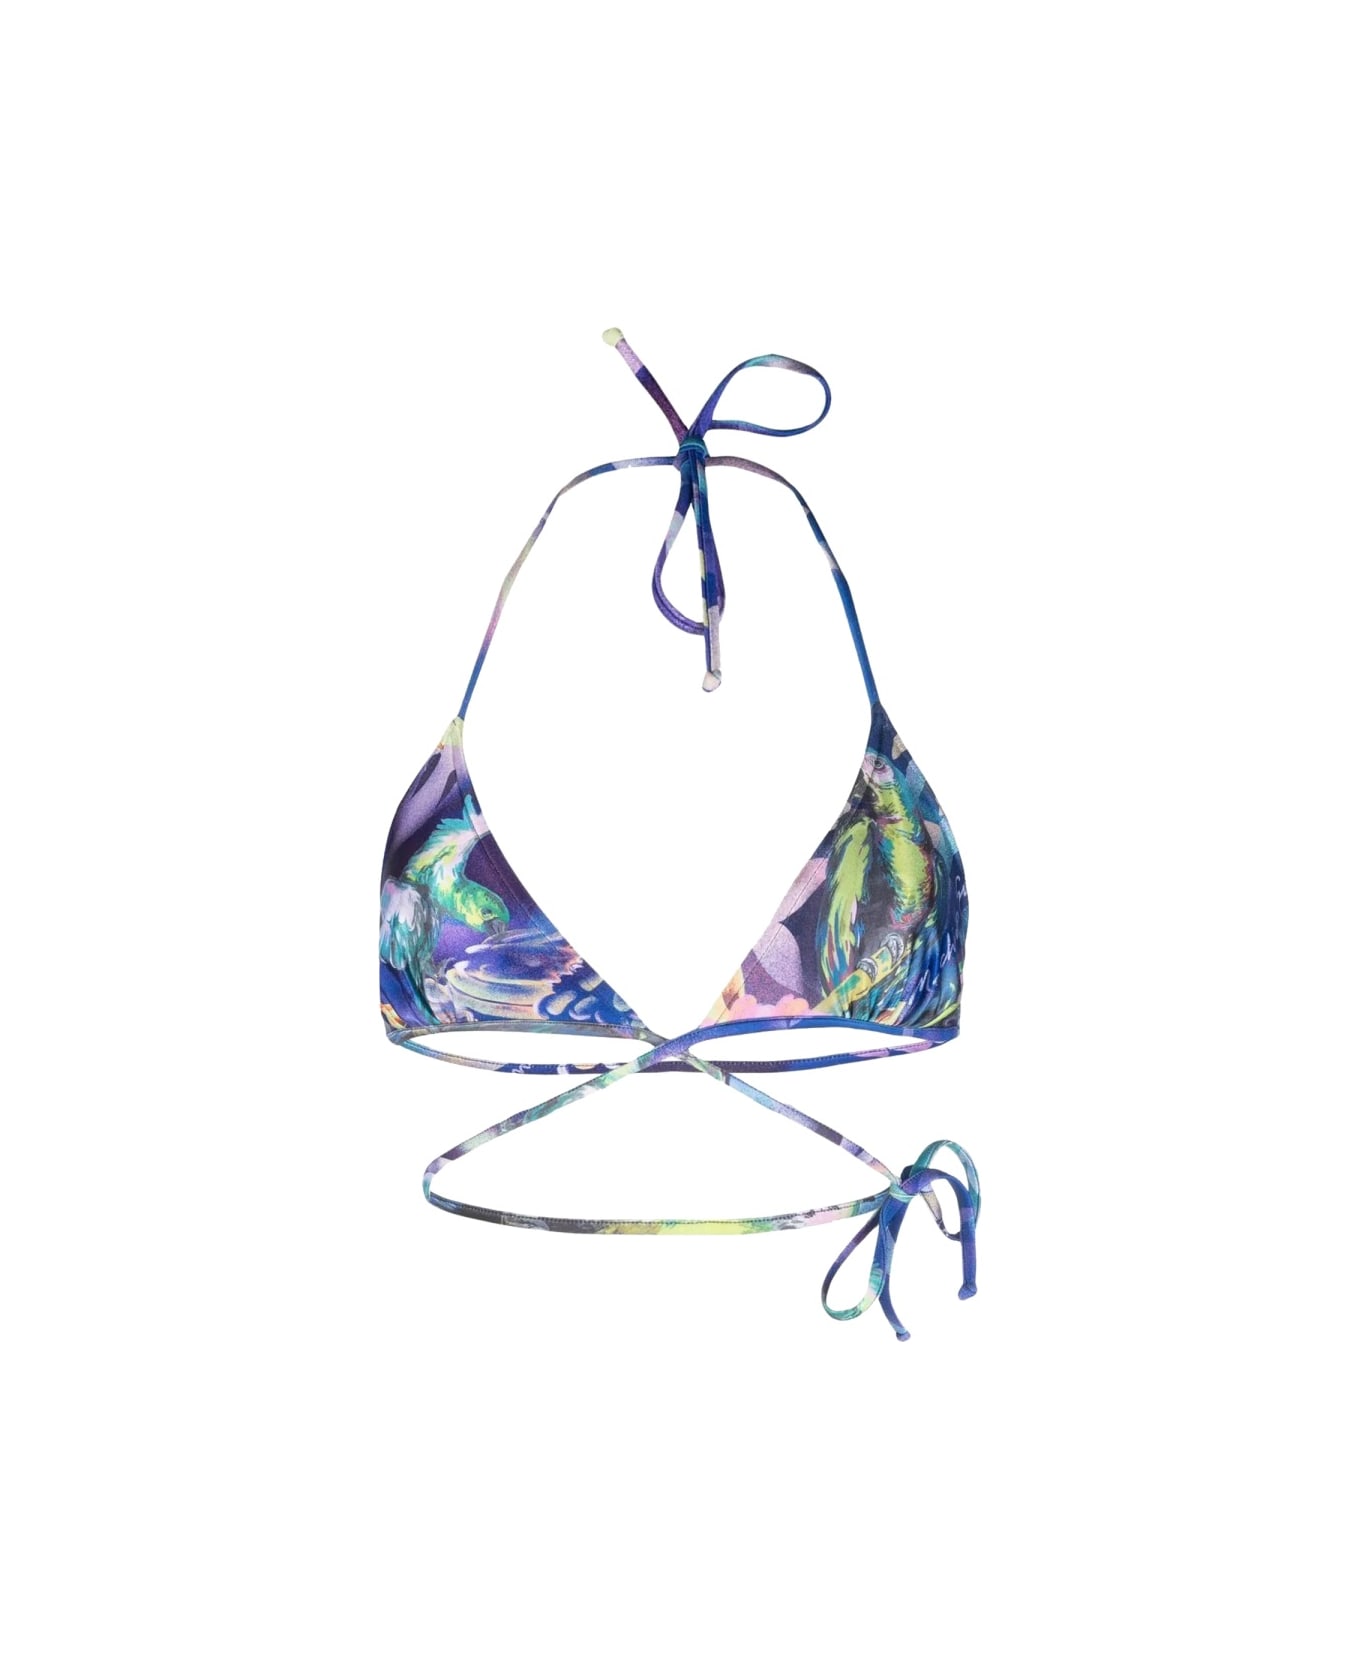 Moschino Printed Bikini Swimsuit - BLUE